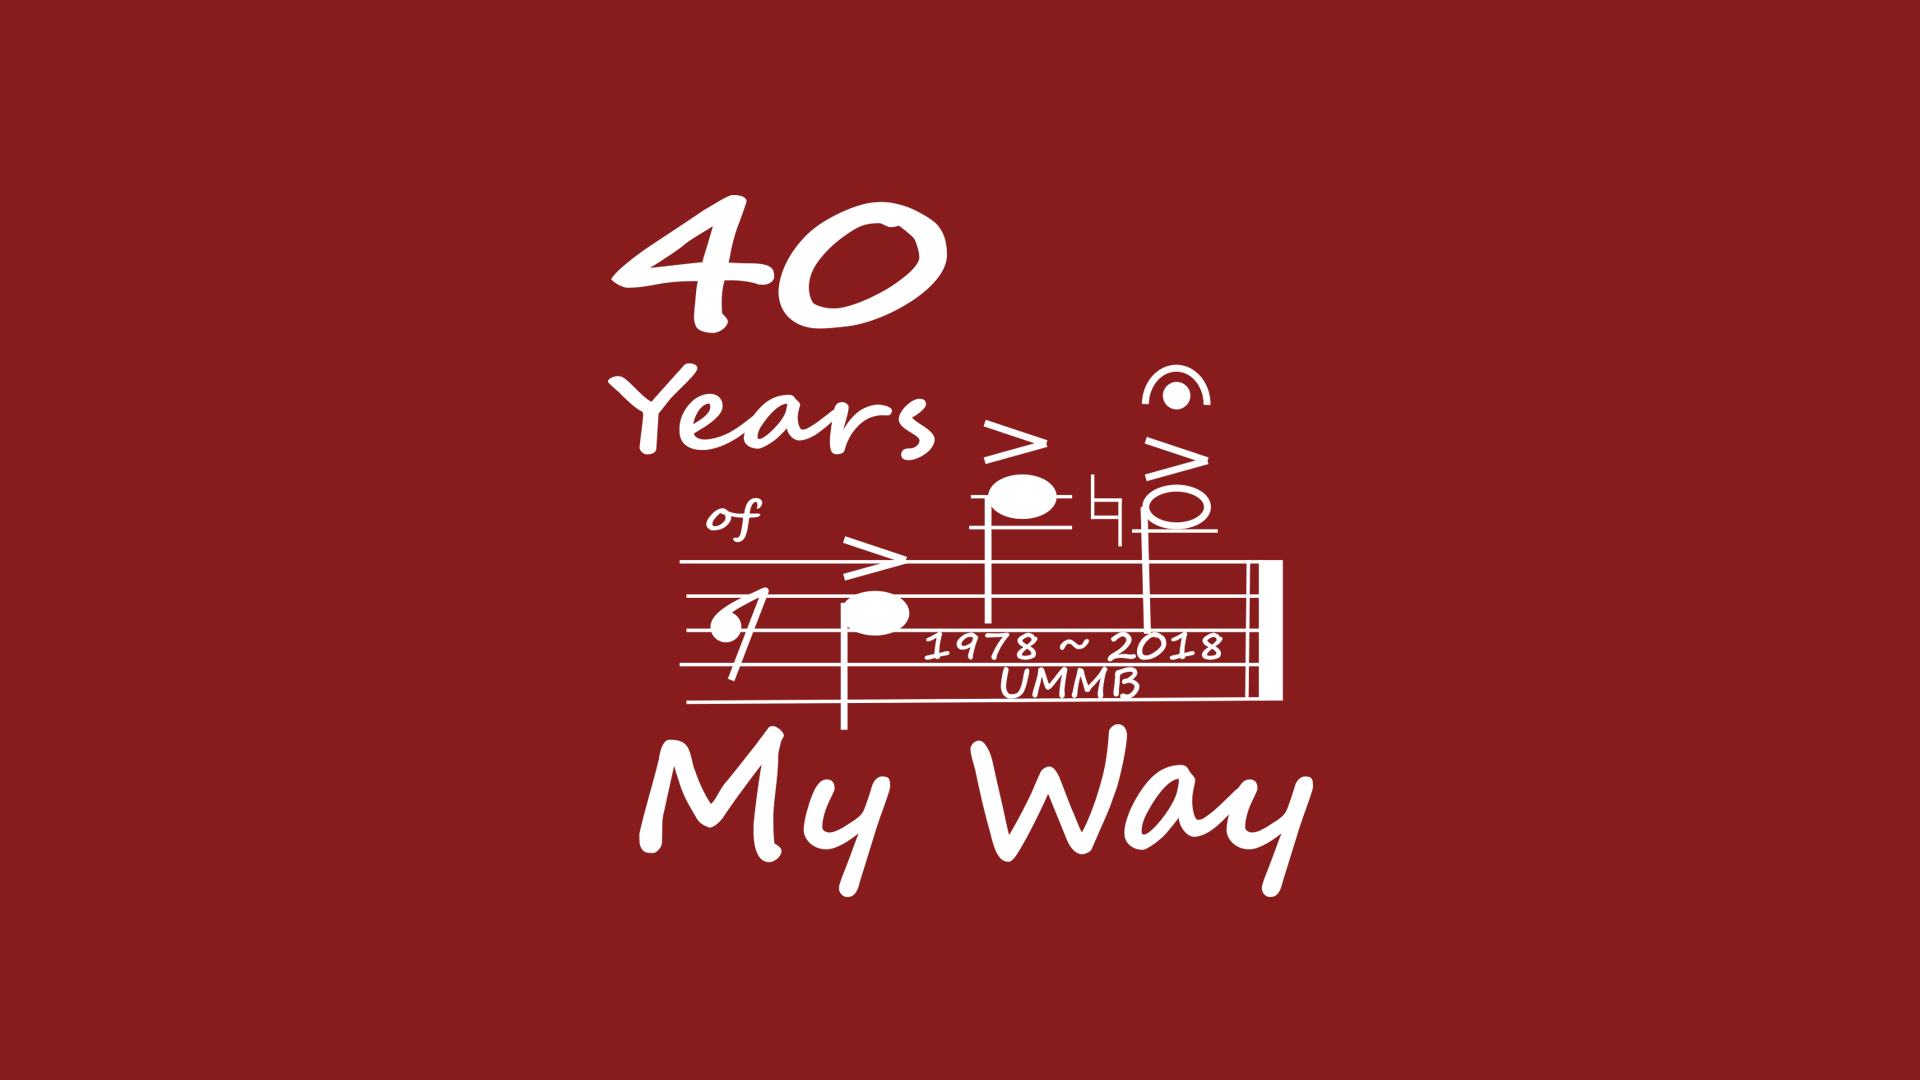 40 Years of My Way